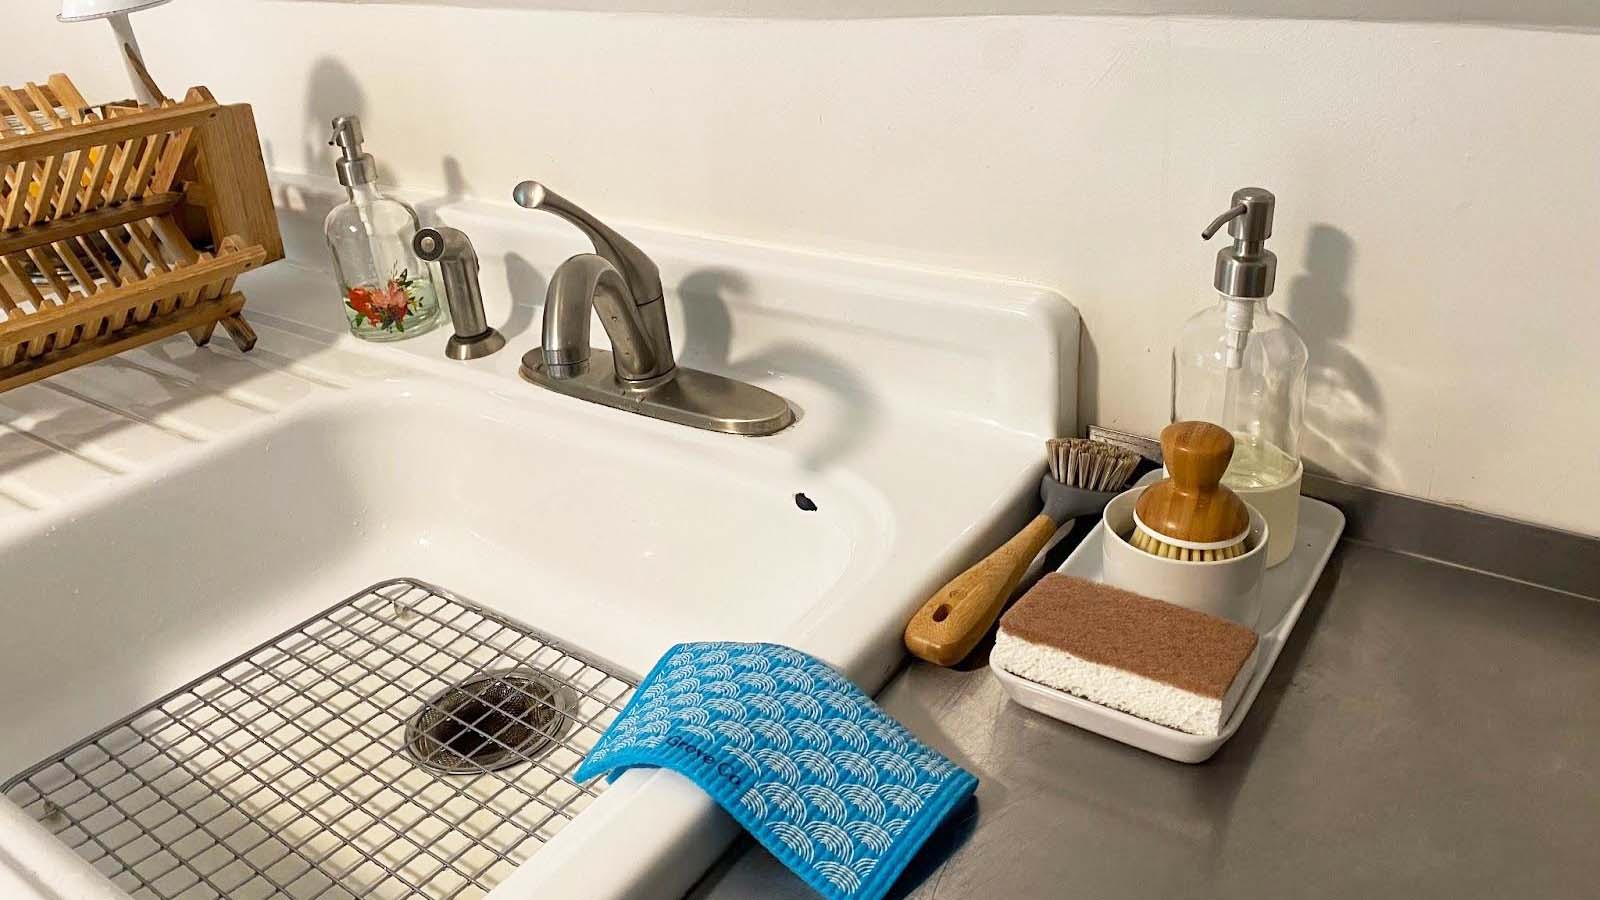 https://media.cnn.com/api/v1/images/stellar/prod/220816132613-sustainable-dish-washing-tips-essentials-wojenski.jpg?c=original